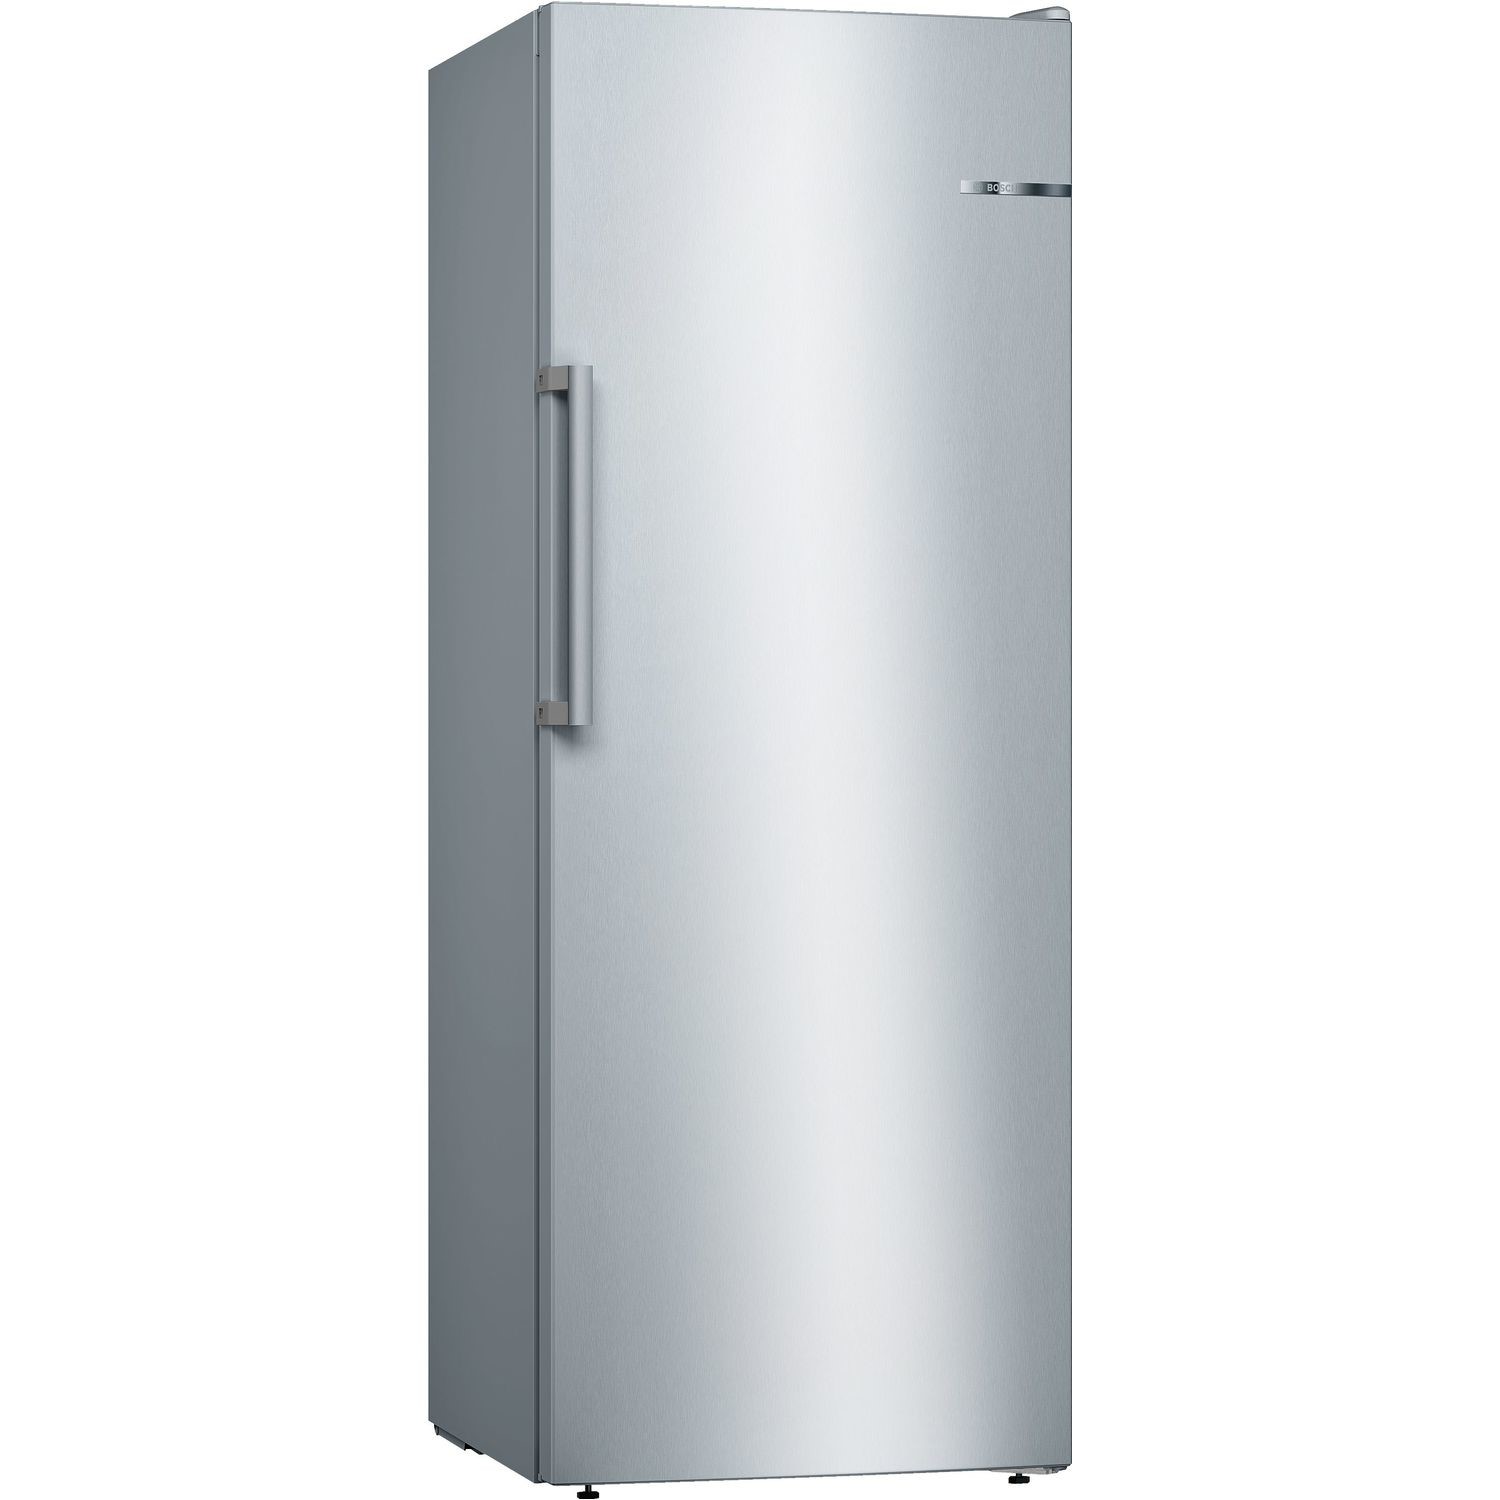 Bosch Serie 4 161x60cm Upright Freestanding Freezer - Stainless Steel Look